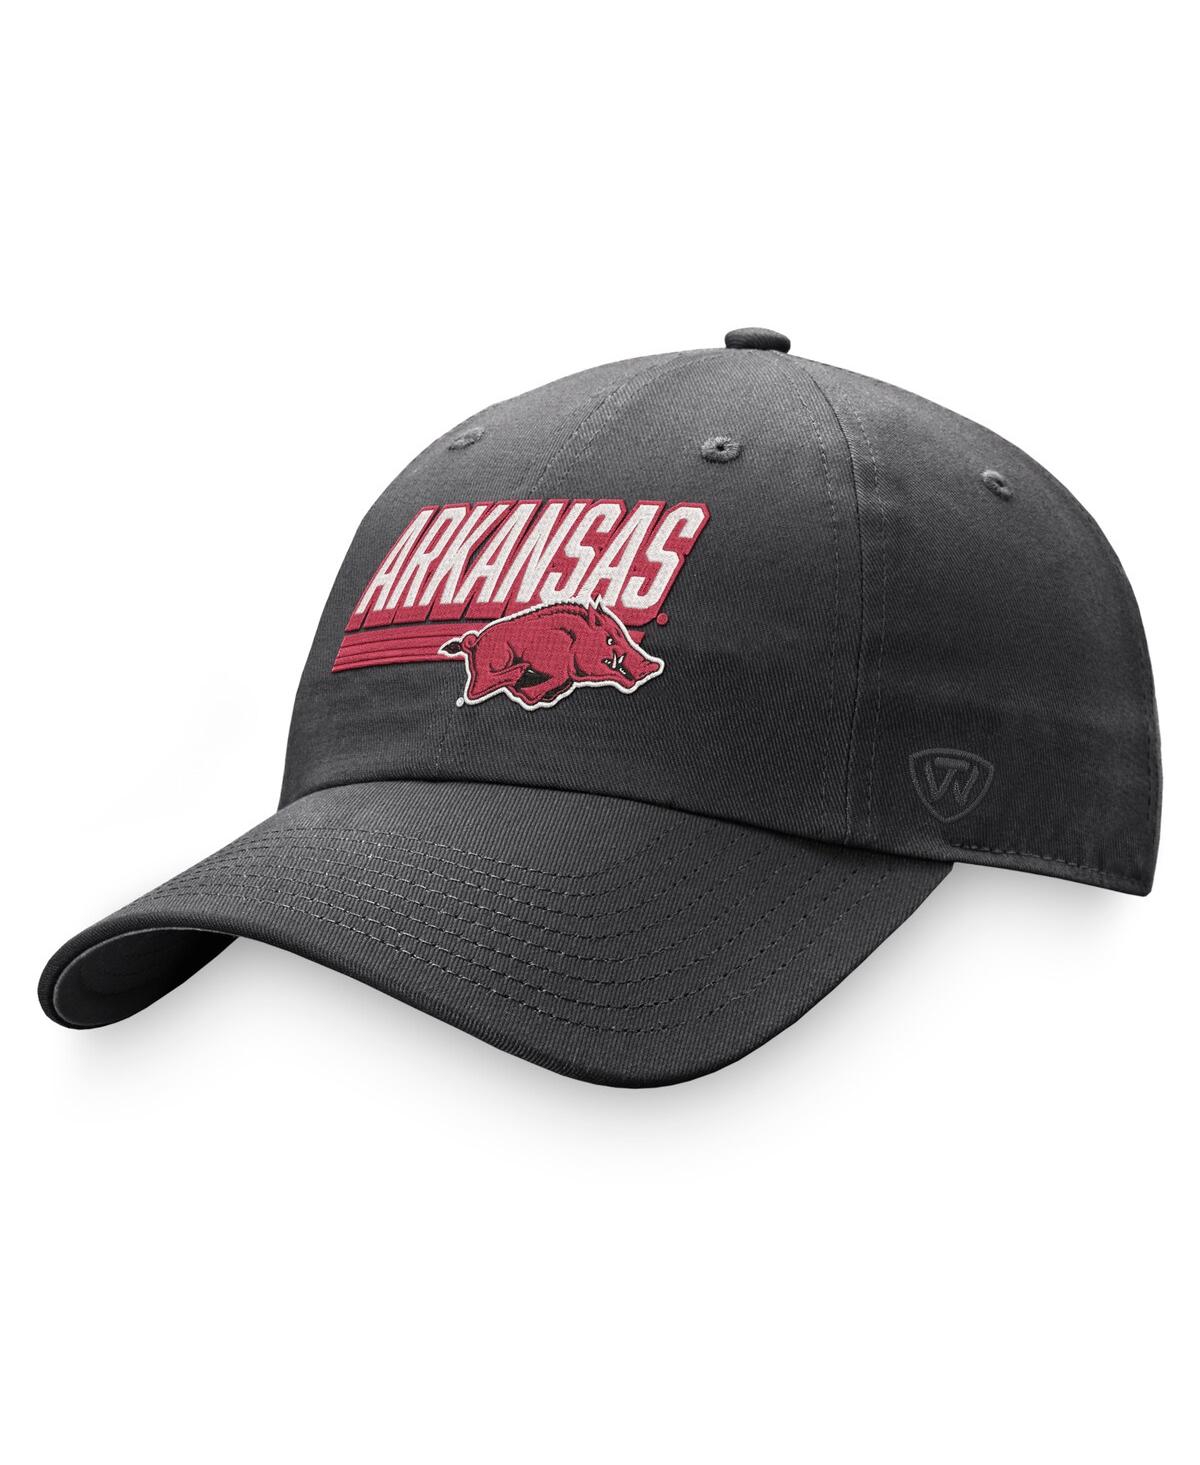 Men's Top of the World Charcoal Arkansas Razorbacks Slice Adjustable Hat - Charcoal